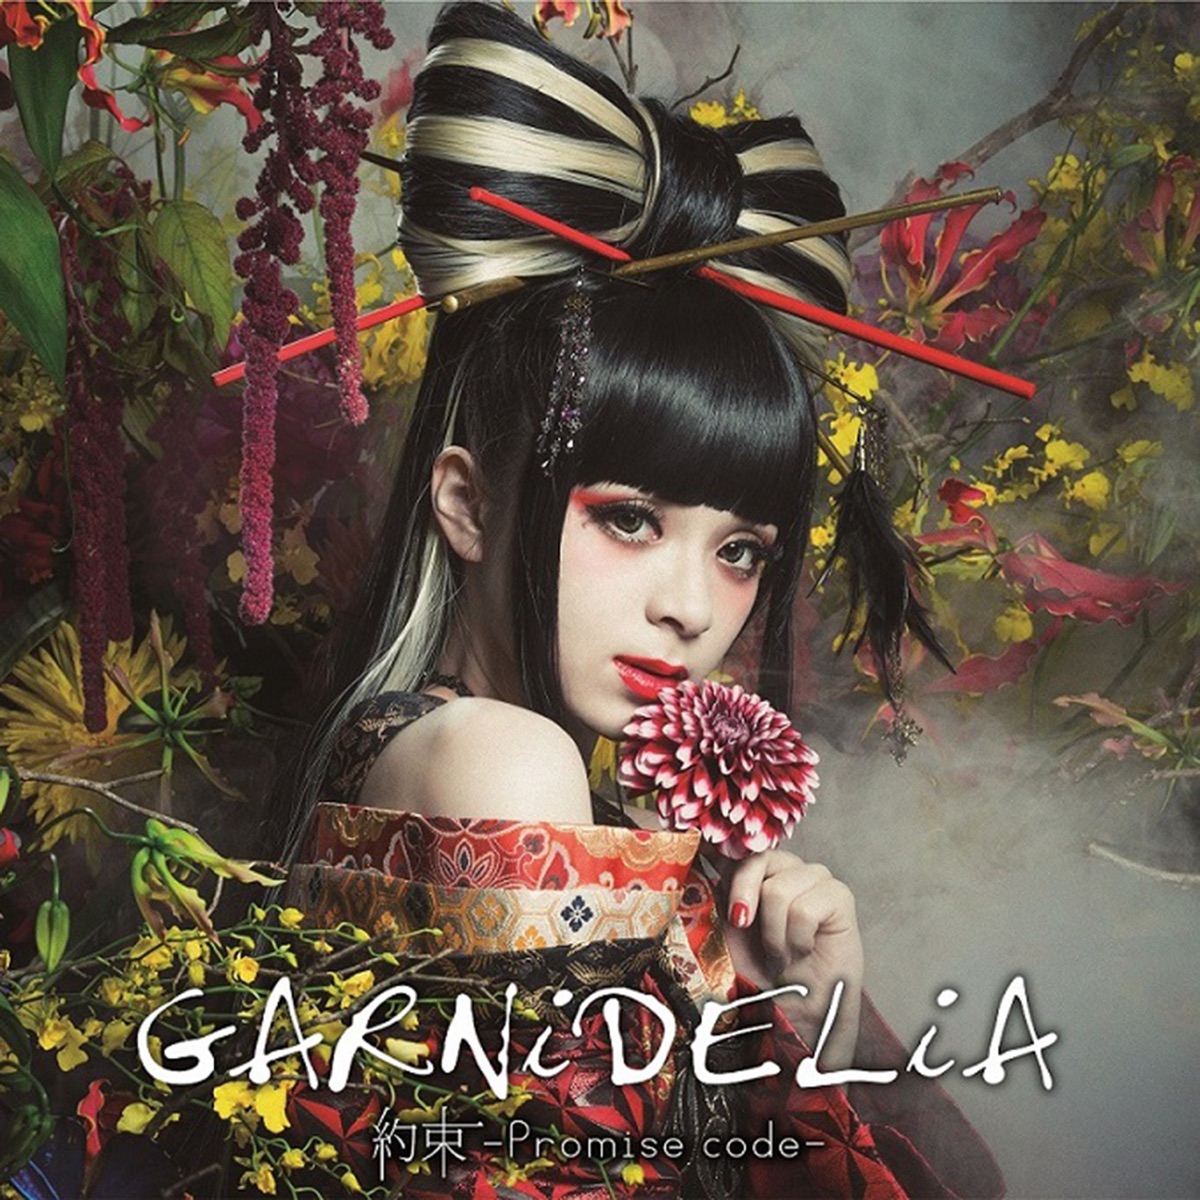 Ten - Album by GARNiDELiA - Apple Music